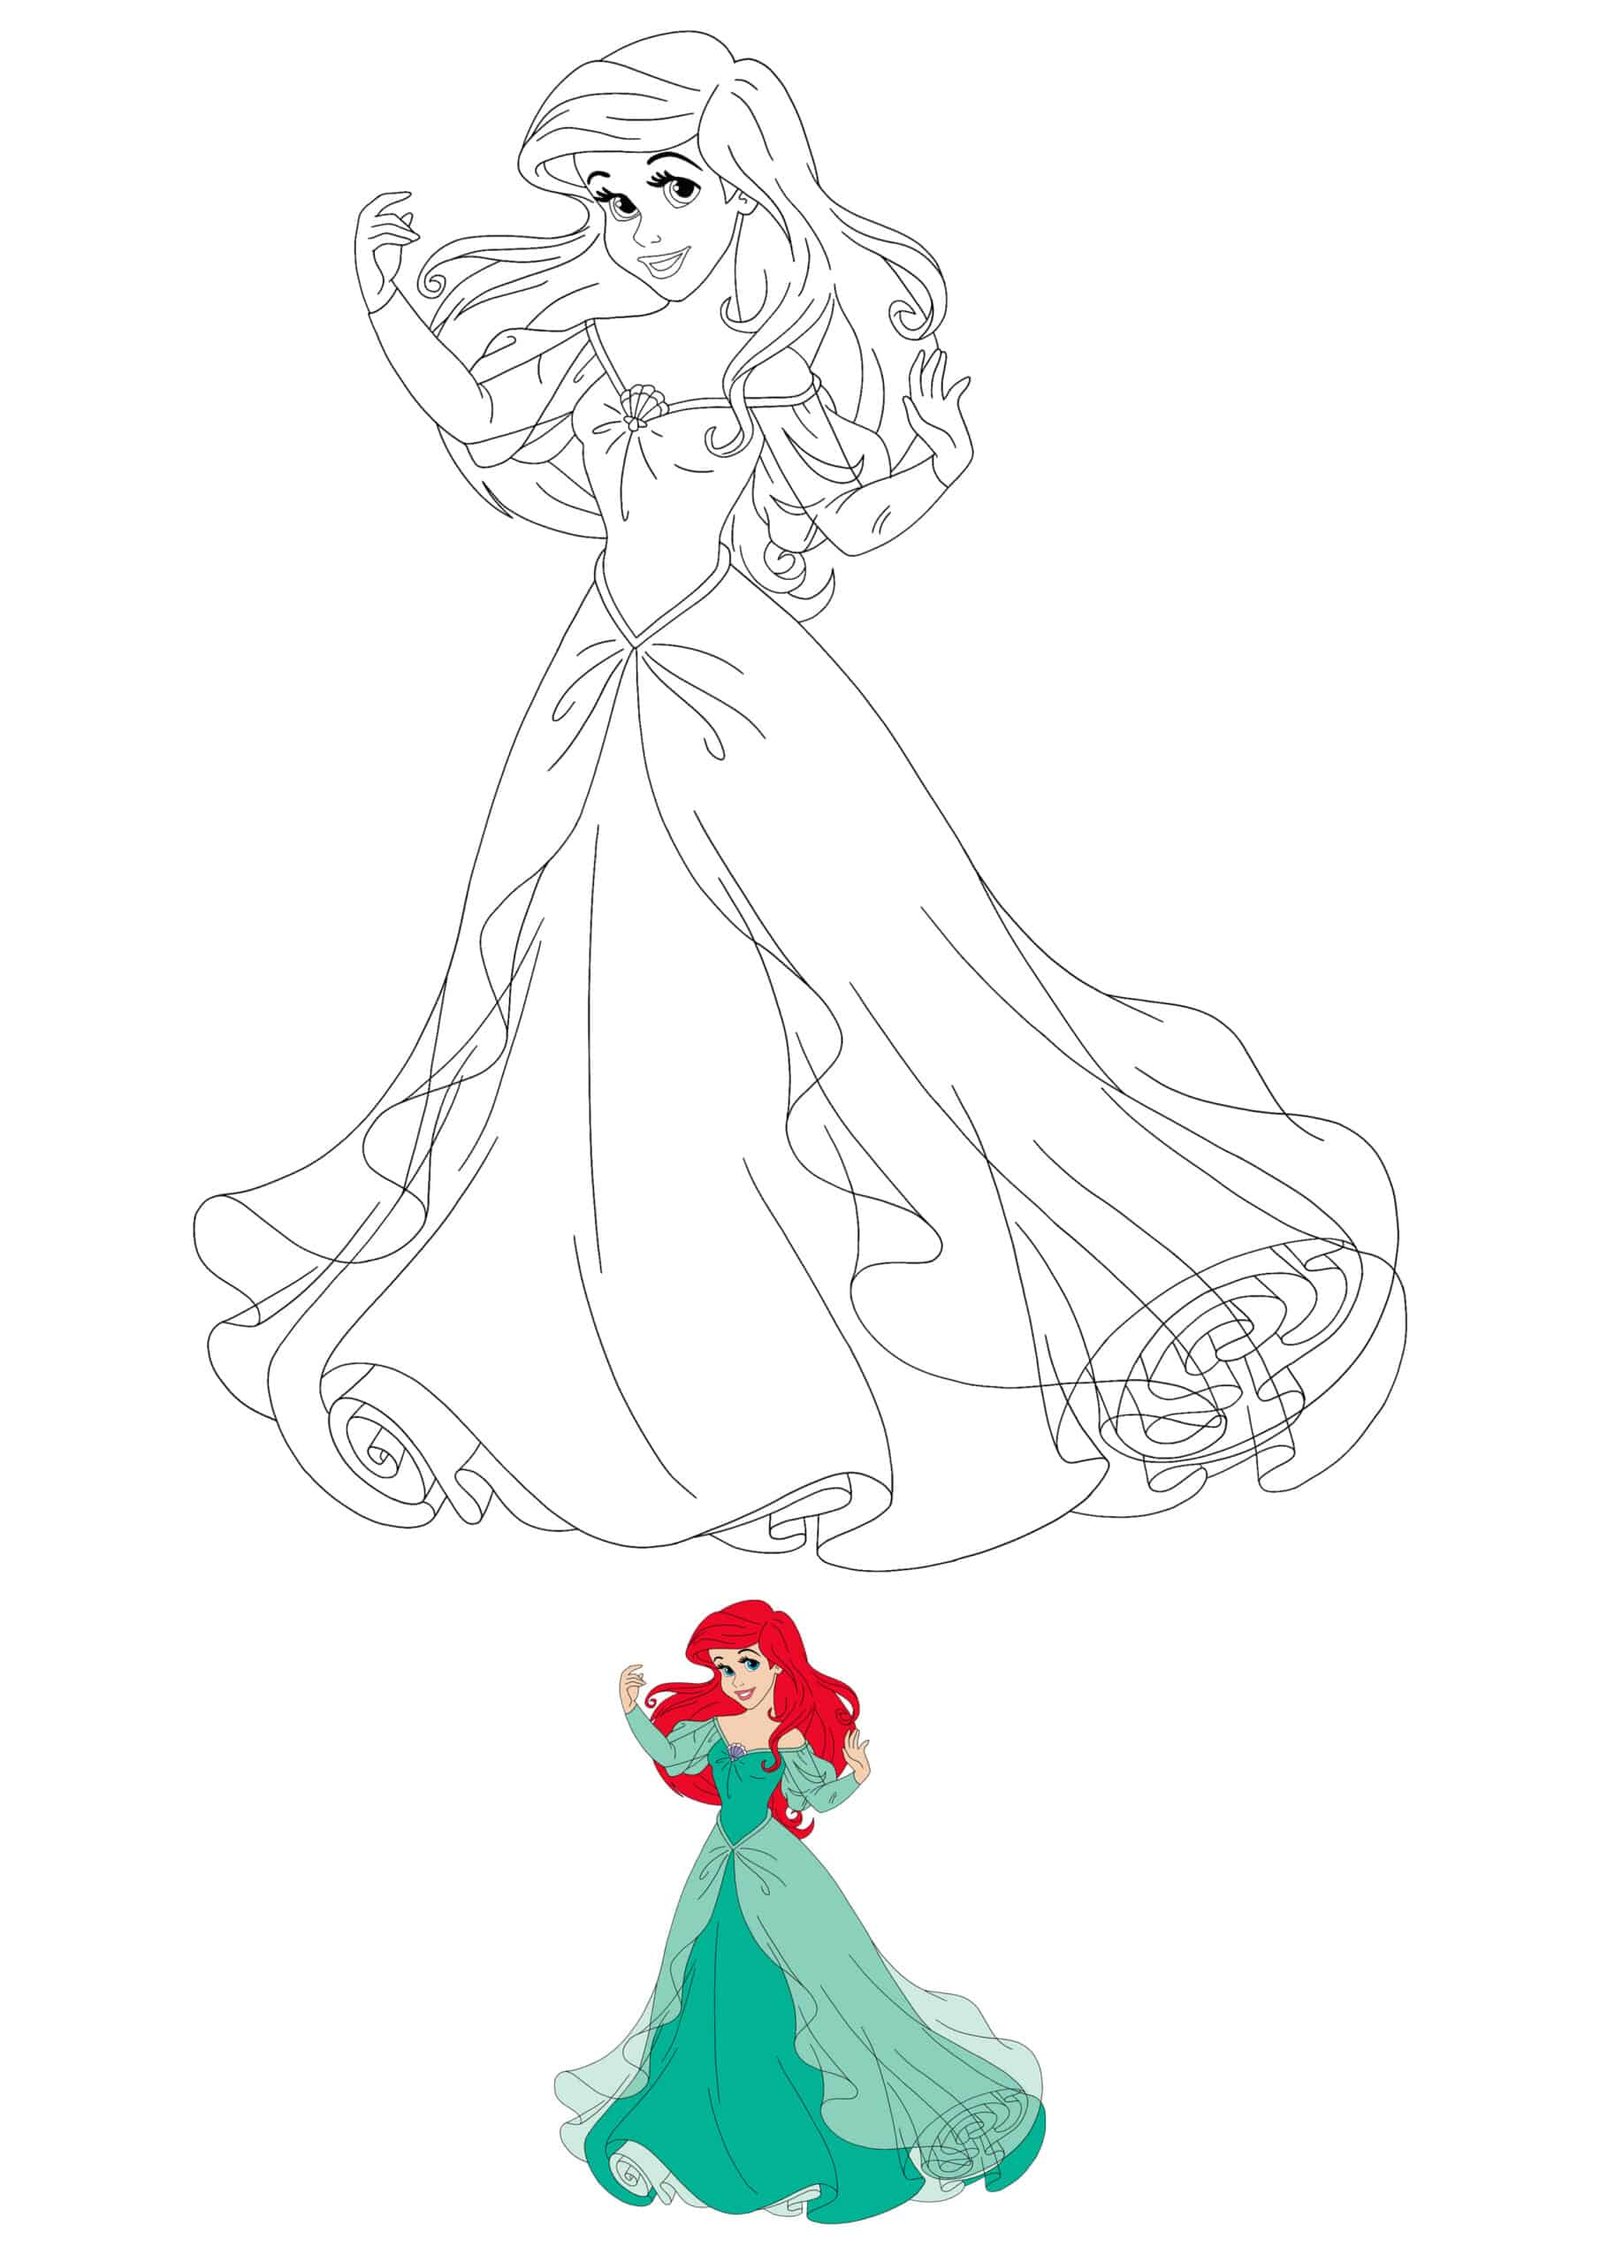 Disney Princess Ariel coloring sheet